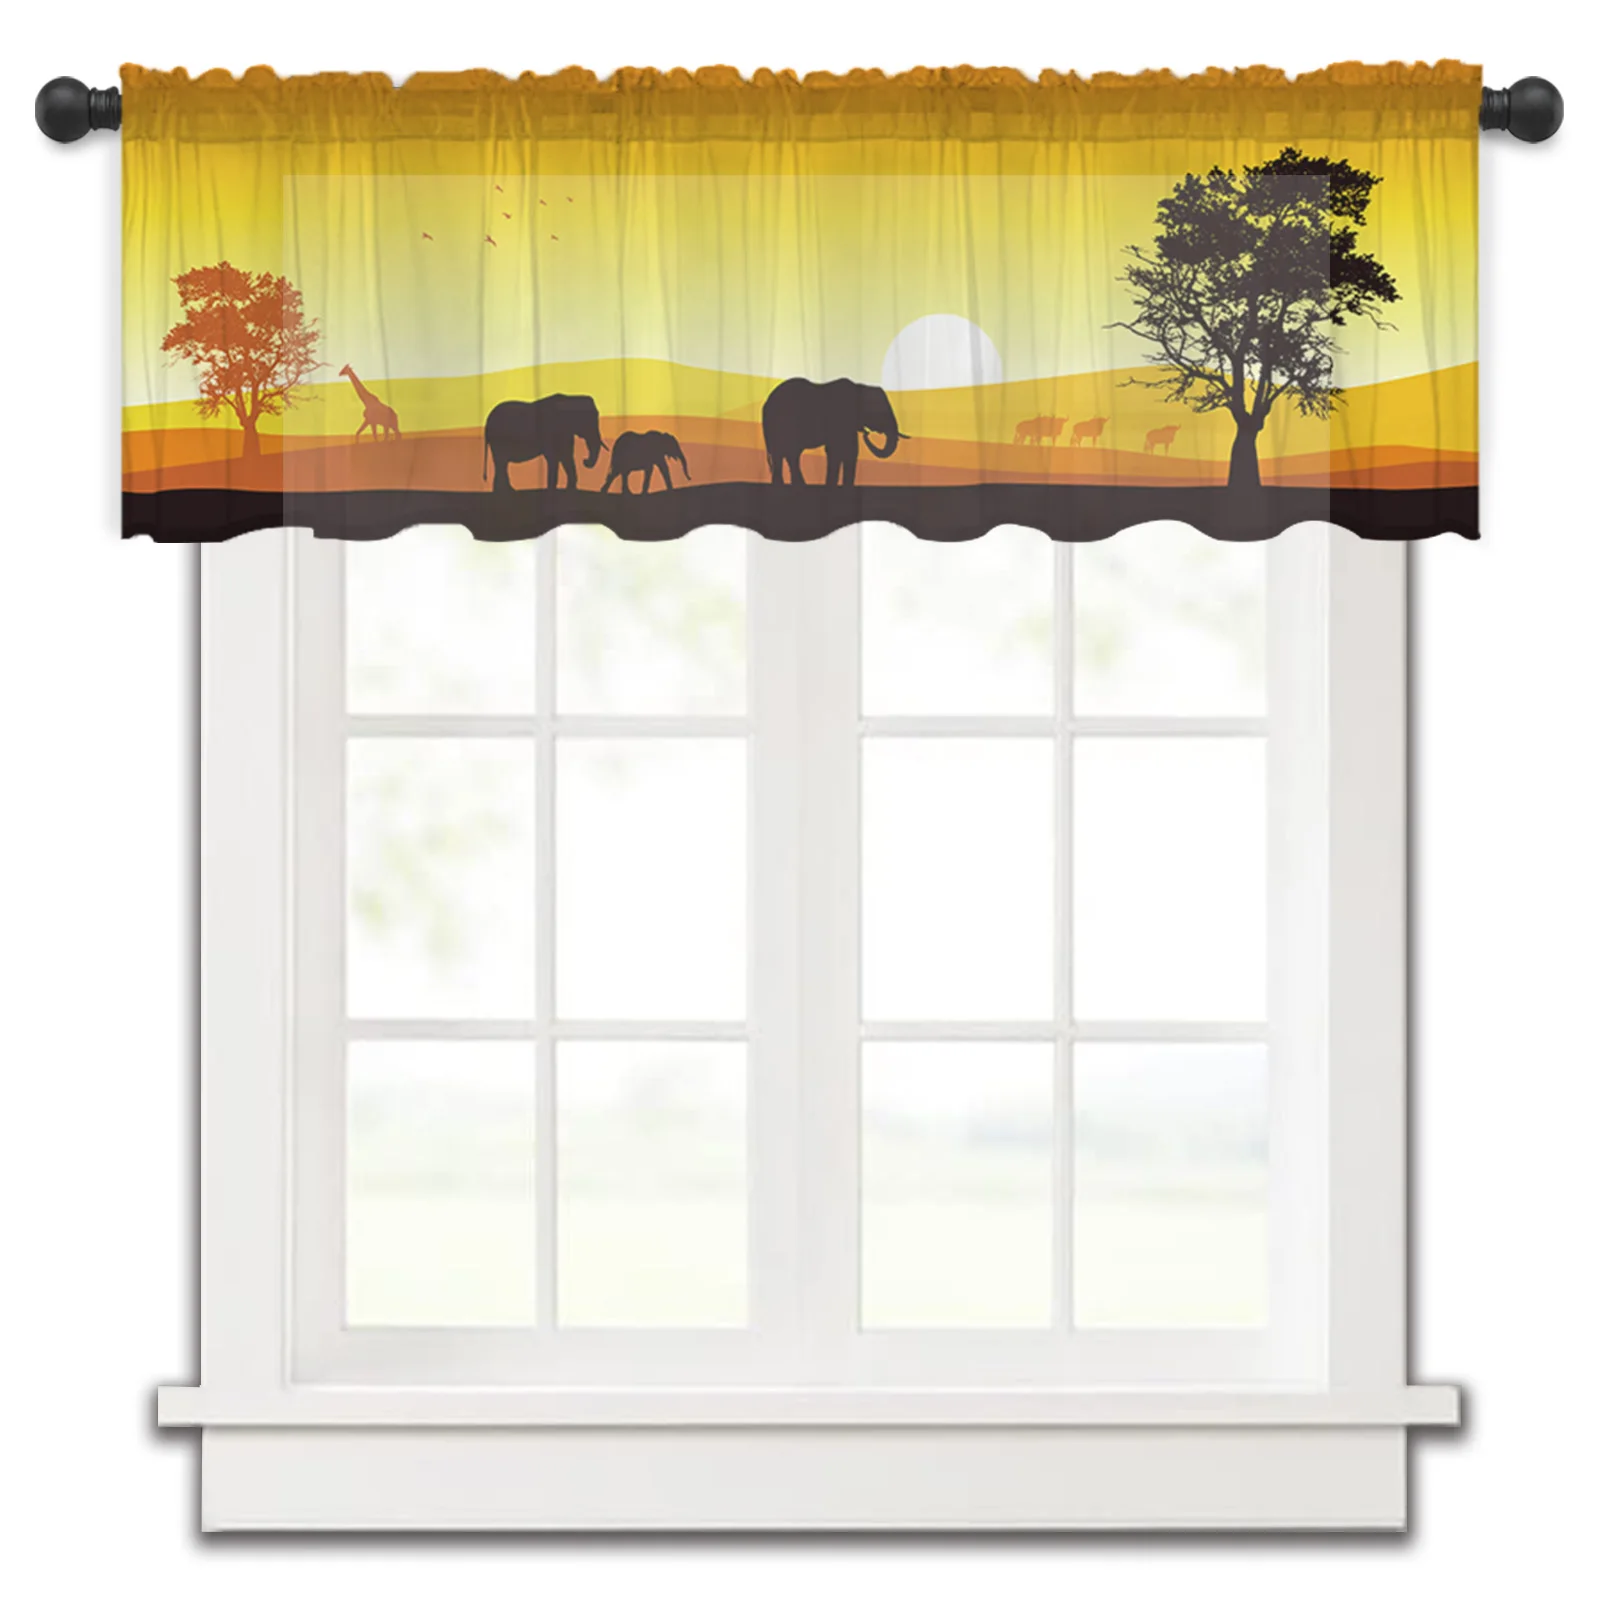 

Africa Sunset Elephant Giraffe Kitchen Small Curtain Tulle Sheer Short Curtain Bedroom Living Room Home Decor Voile Drapes